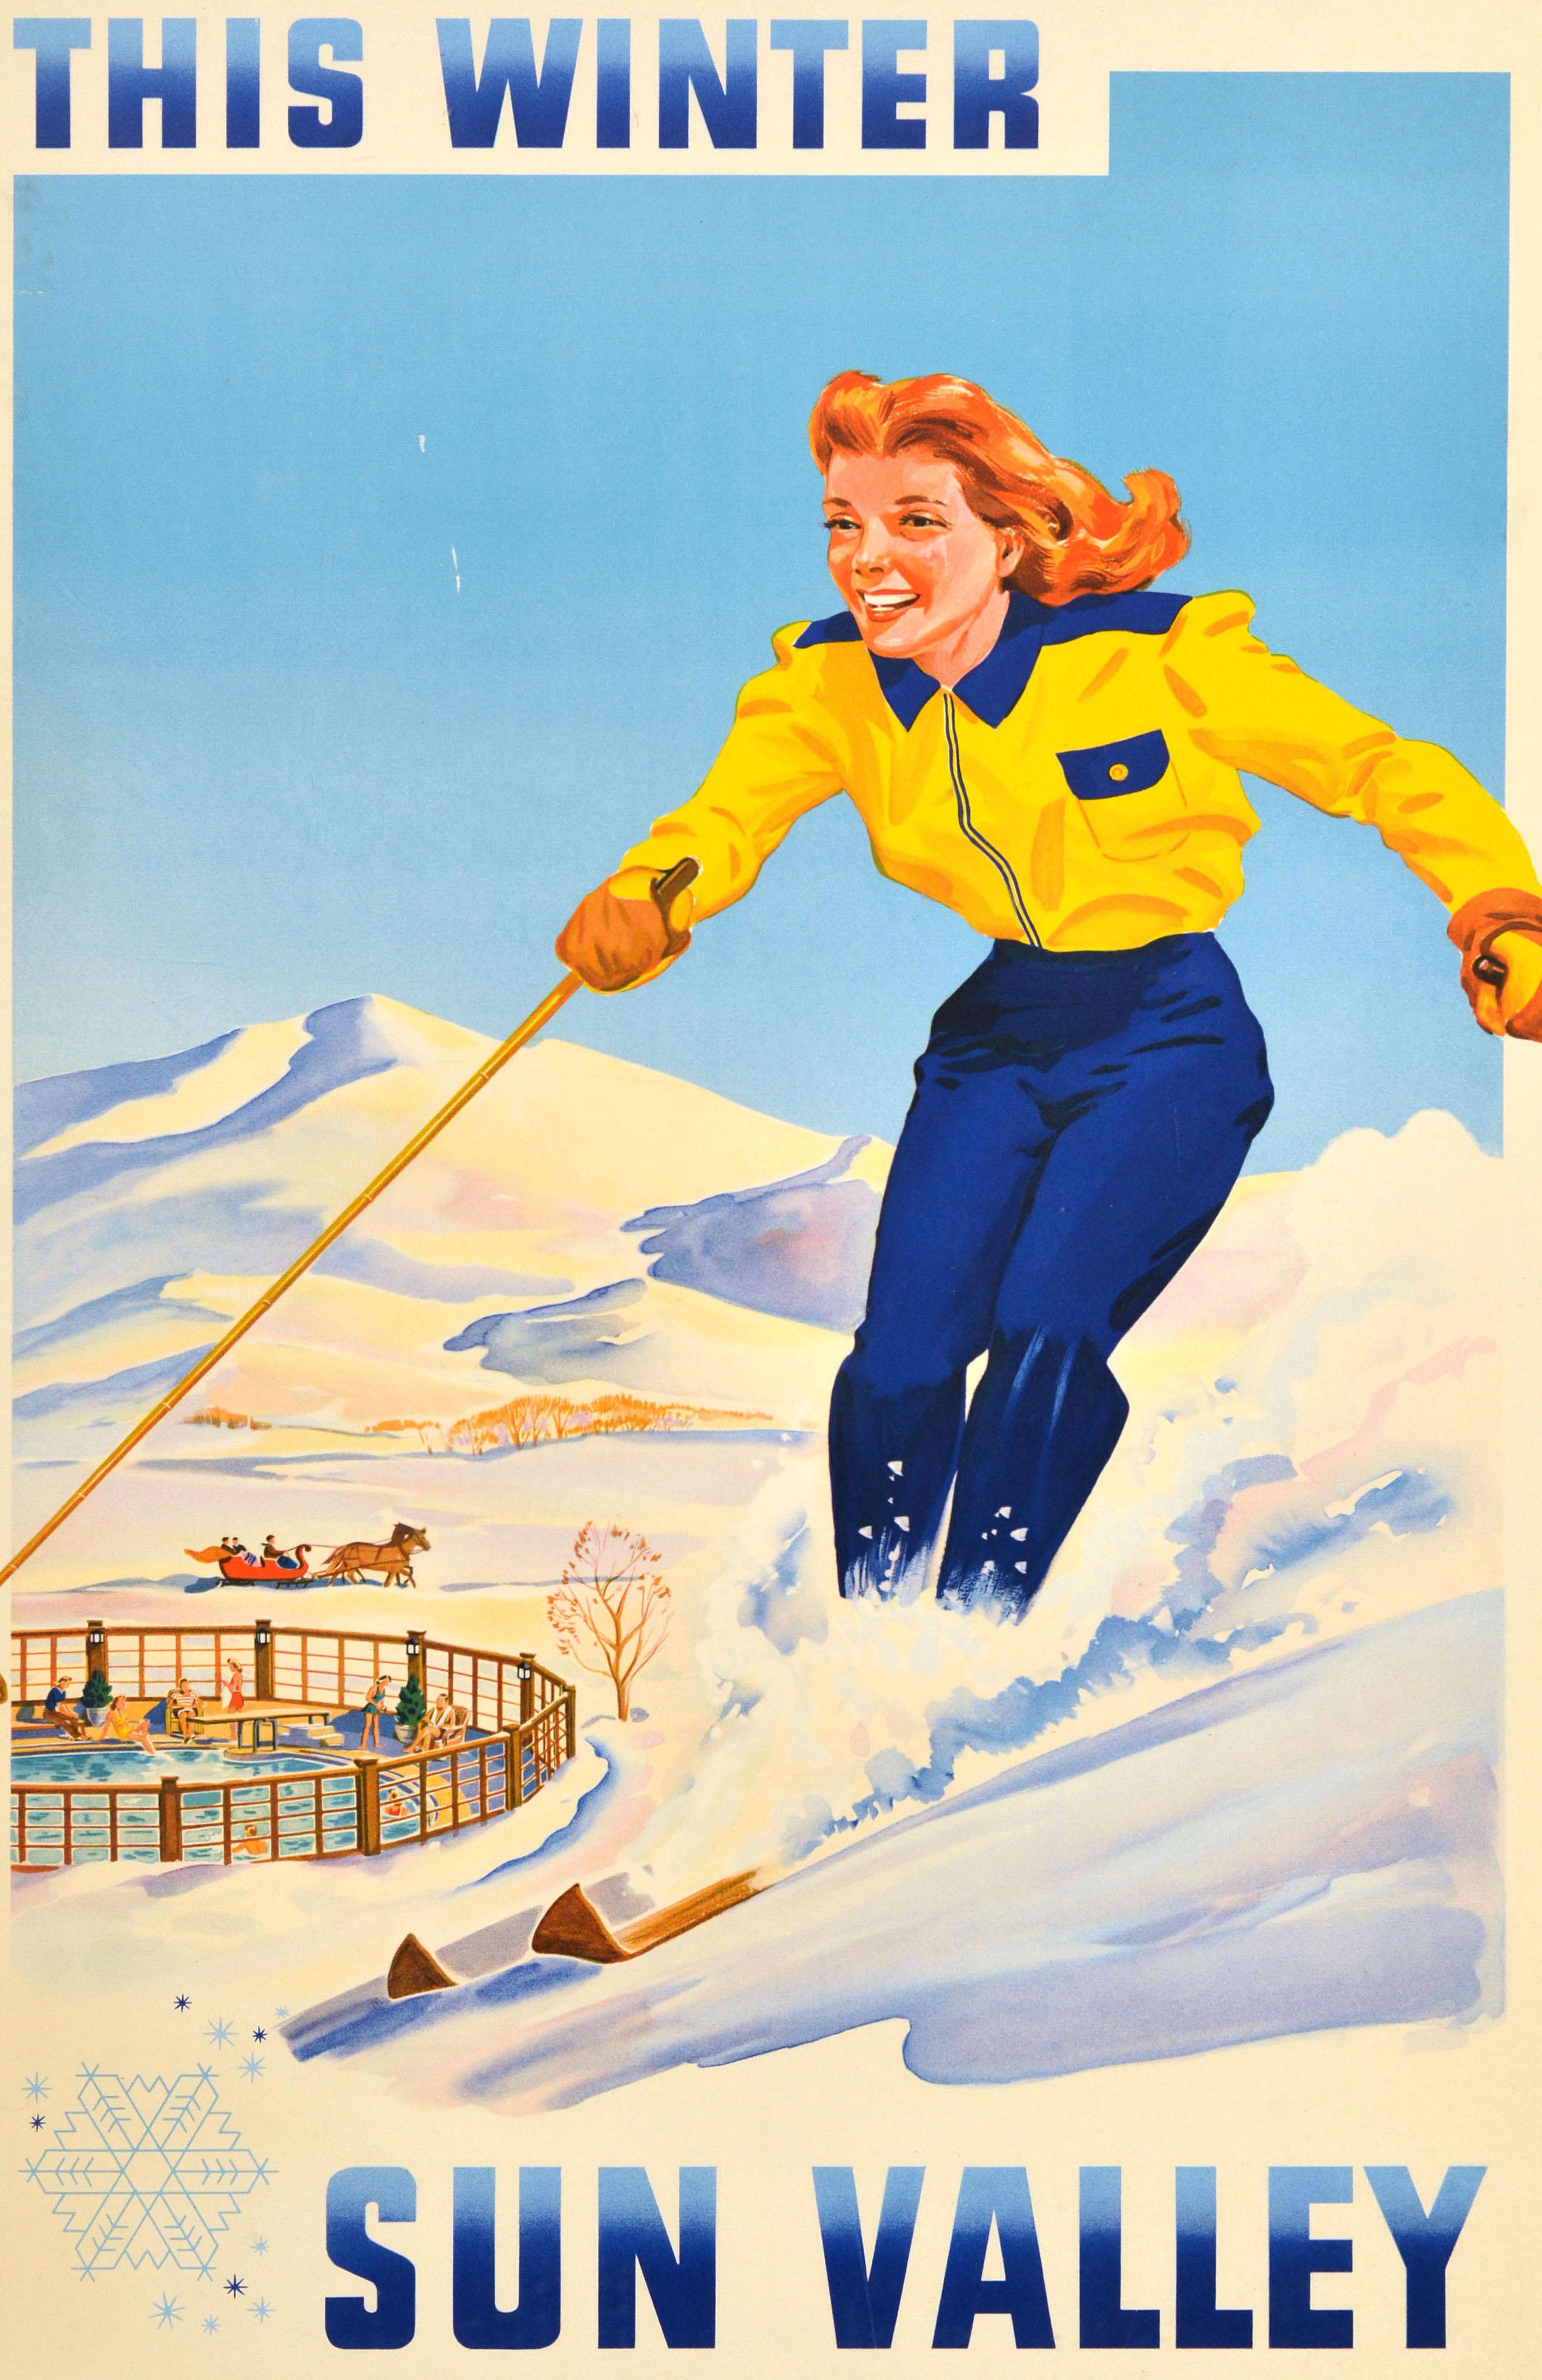 Original Vintage Winter Ski Sports Travel Poster This Winter Sun Valley Idaho - Print by Unknown